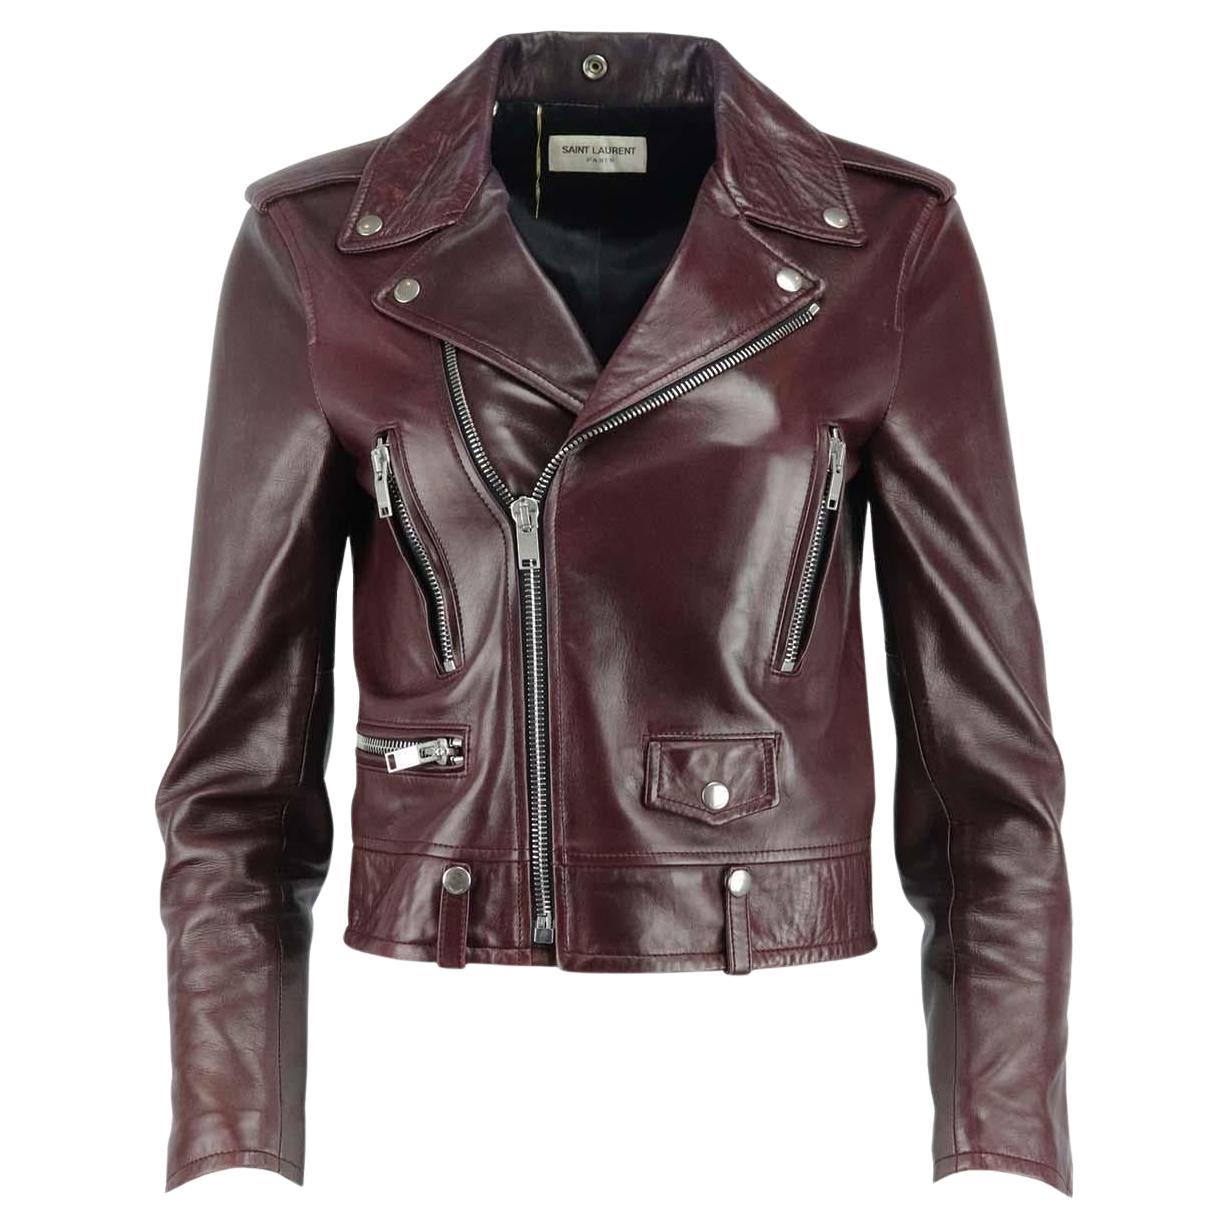 Saint Laurent Leather Biker Jacket FR 38 UK 10 